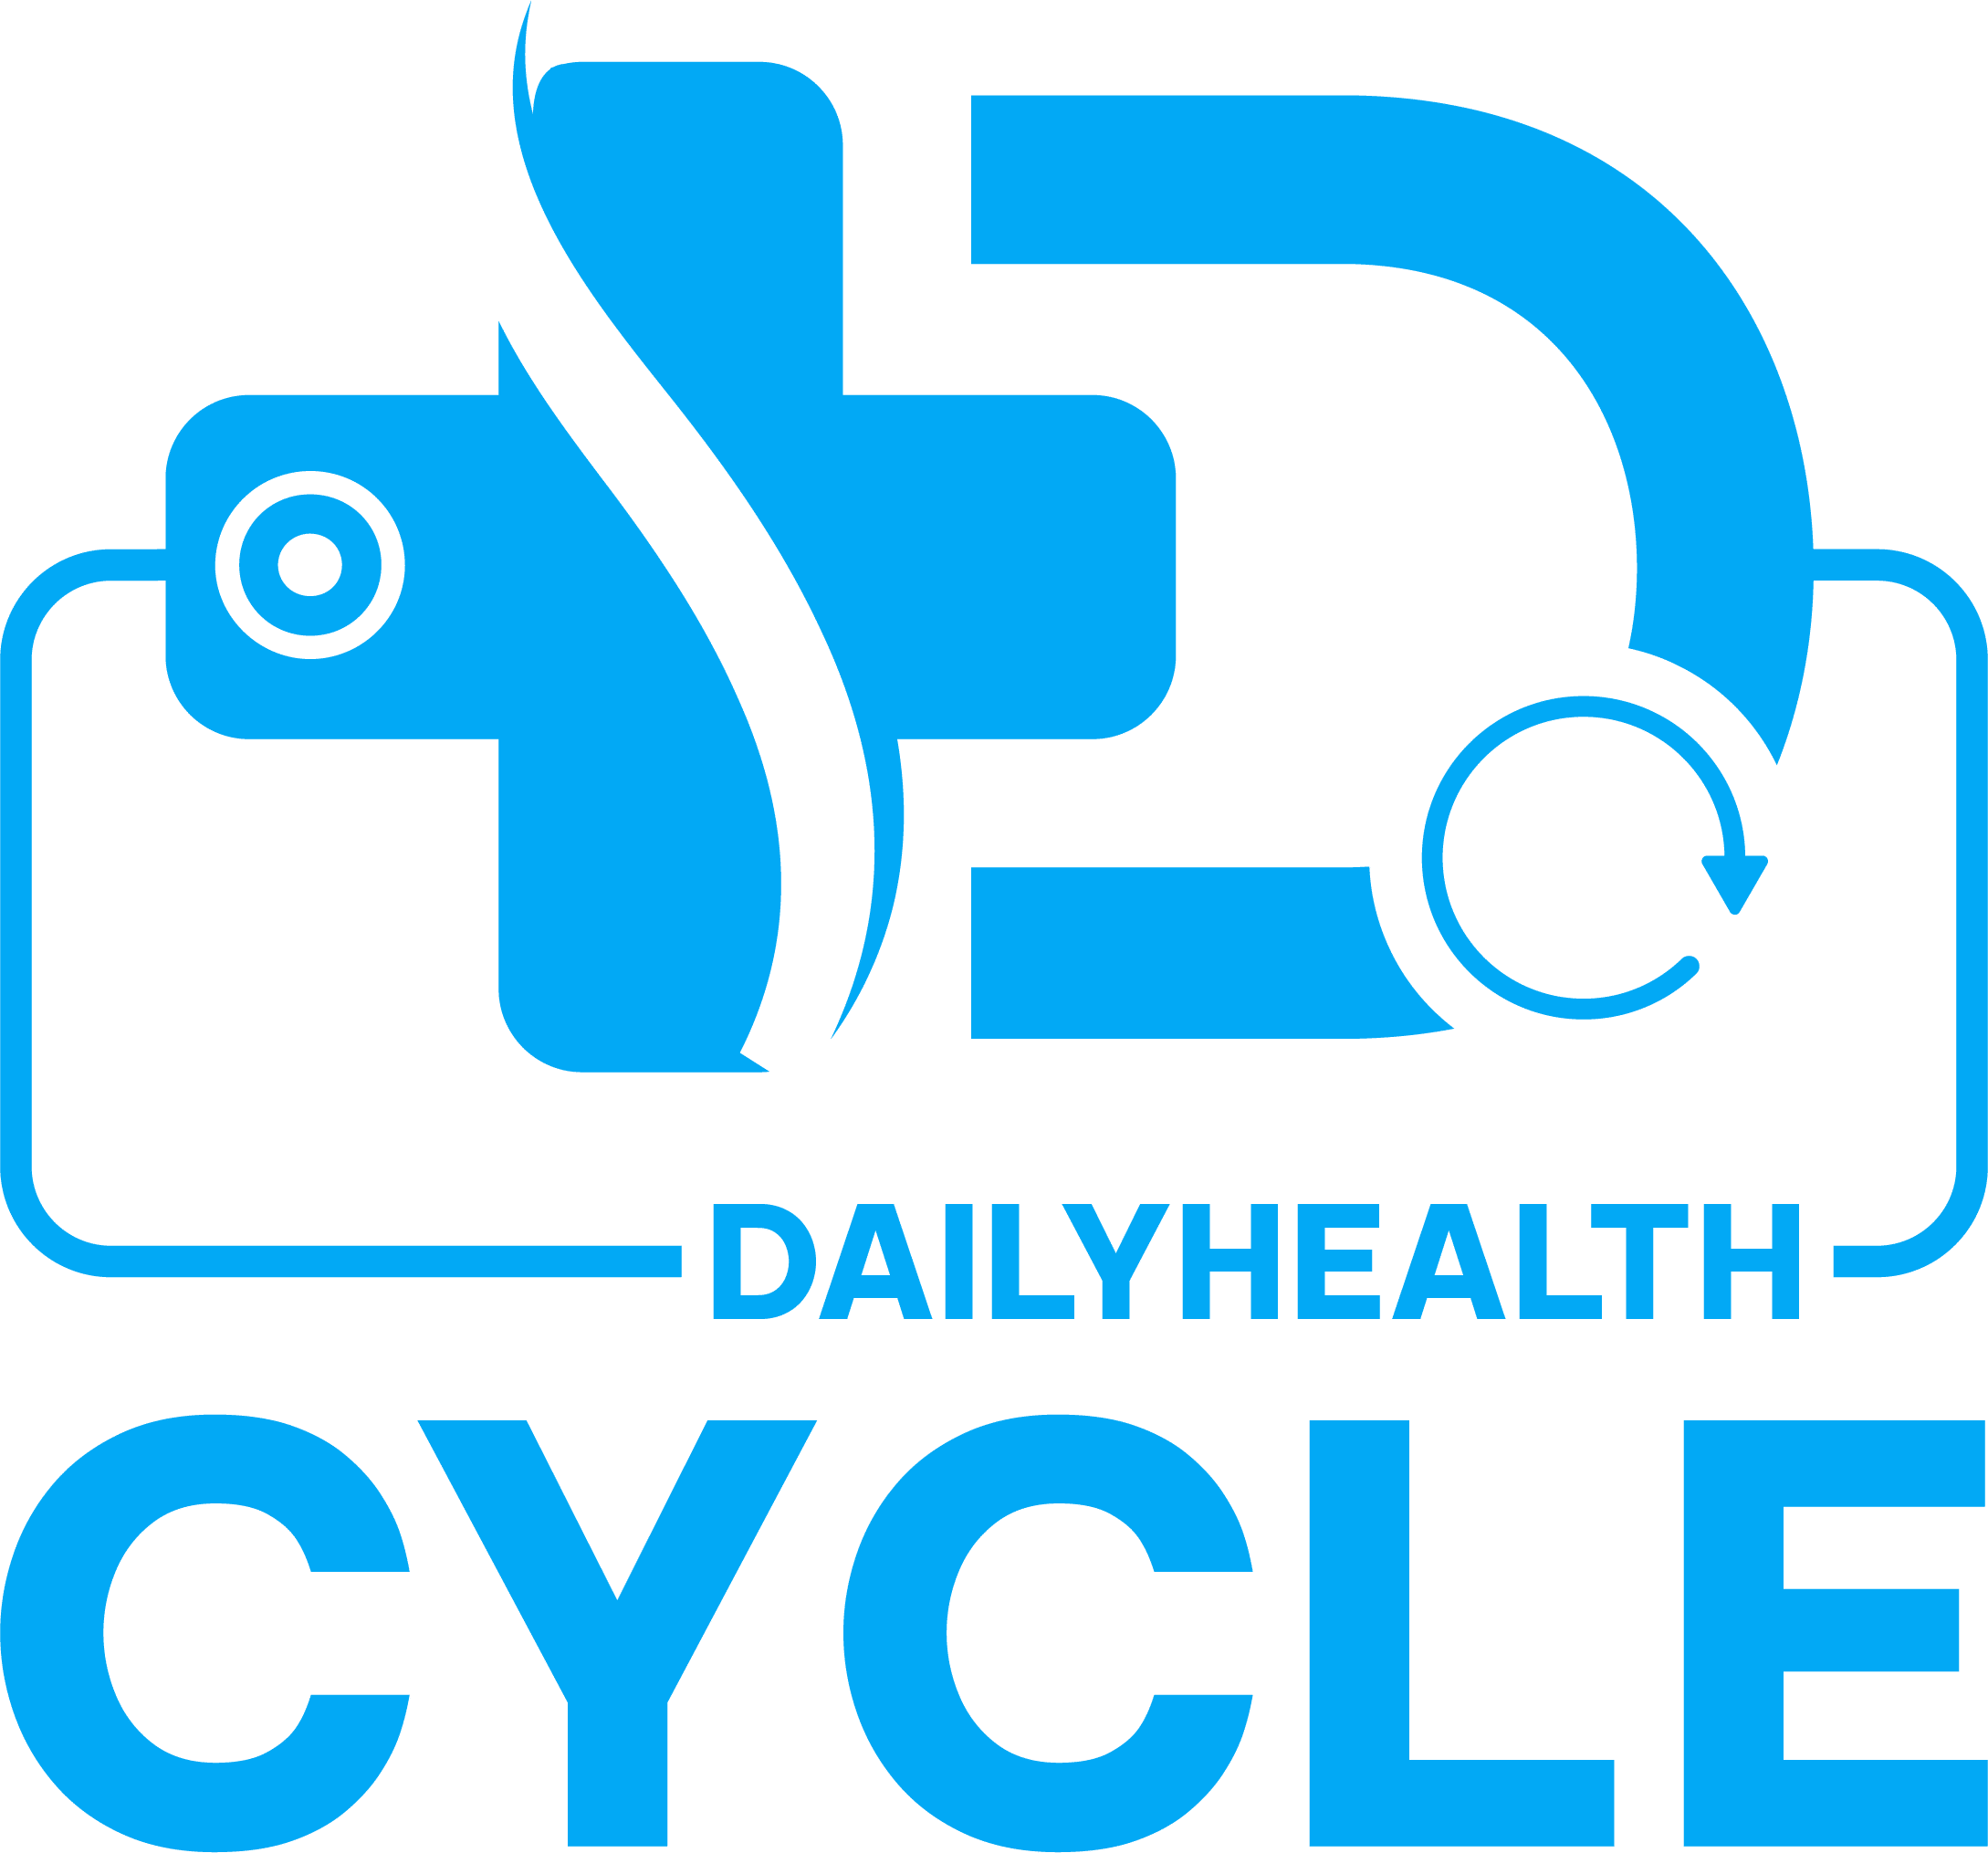 Daily health Cycle main logo